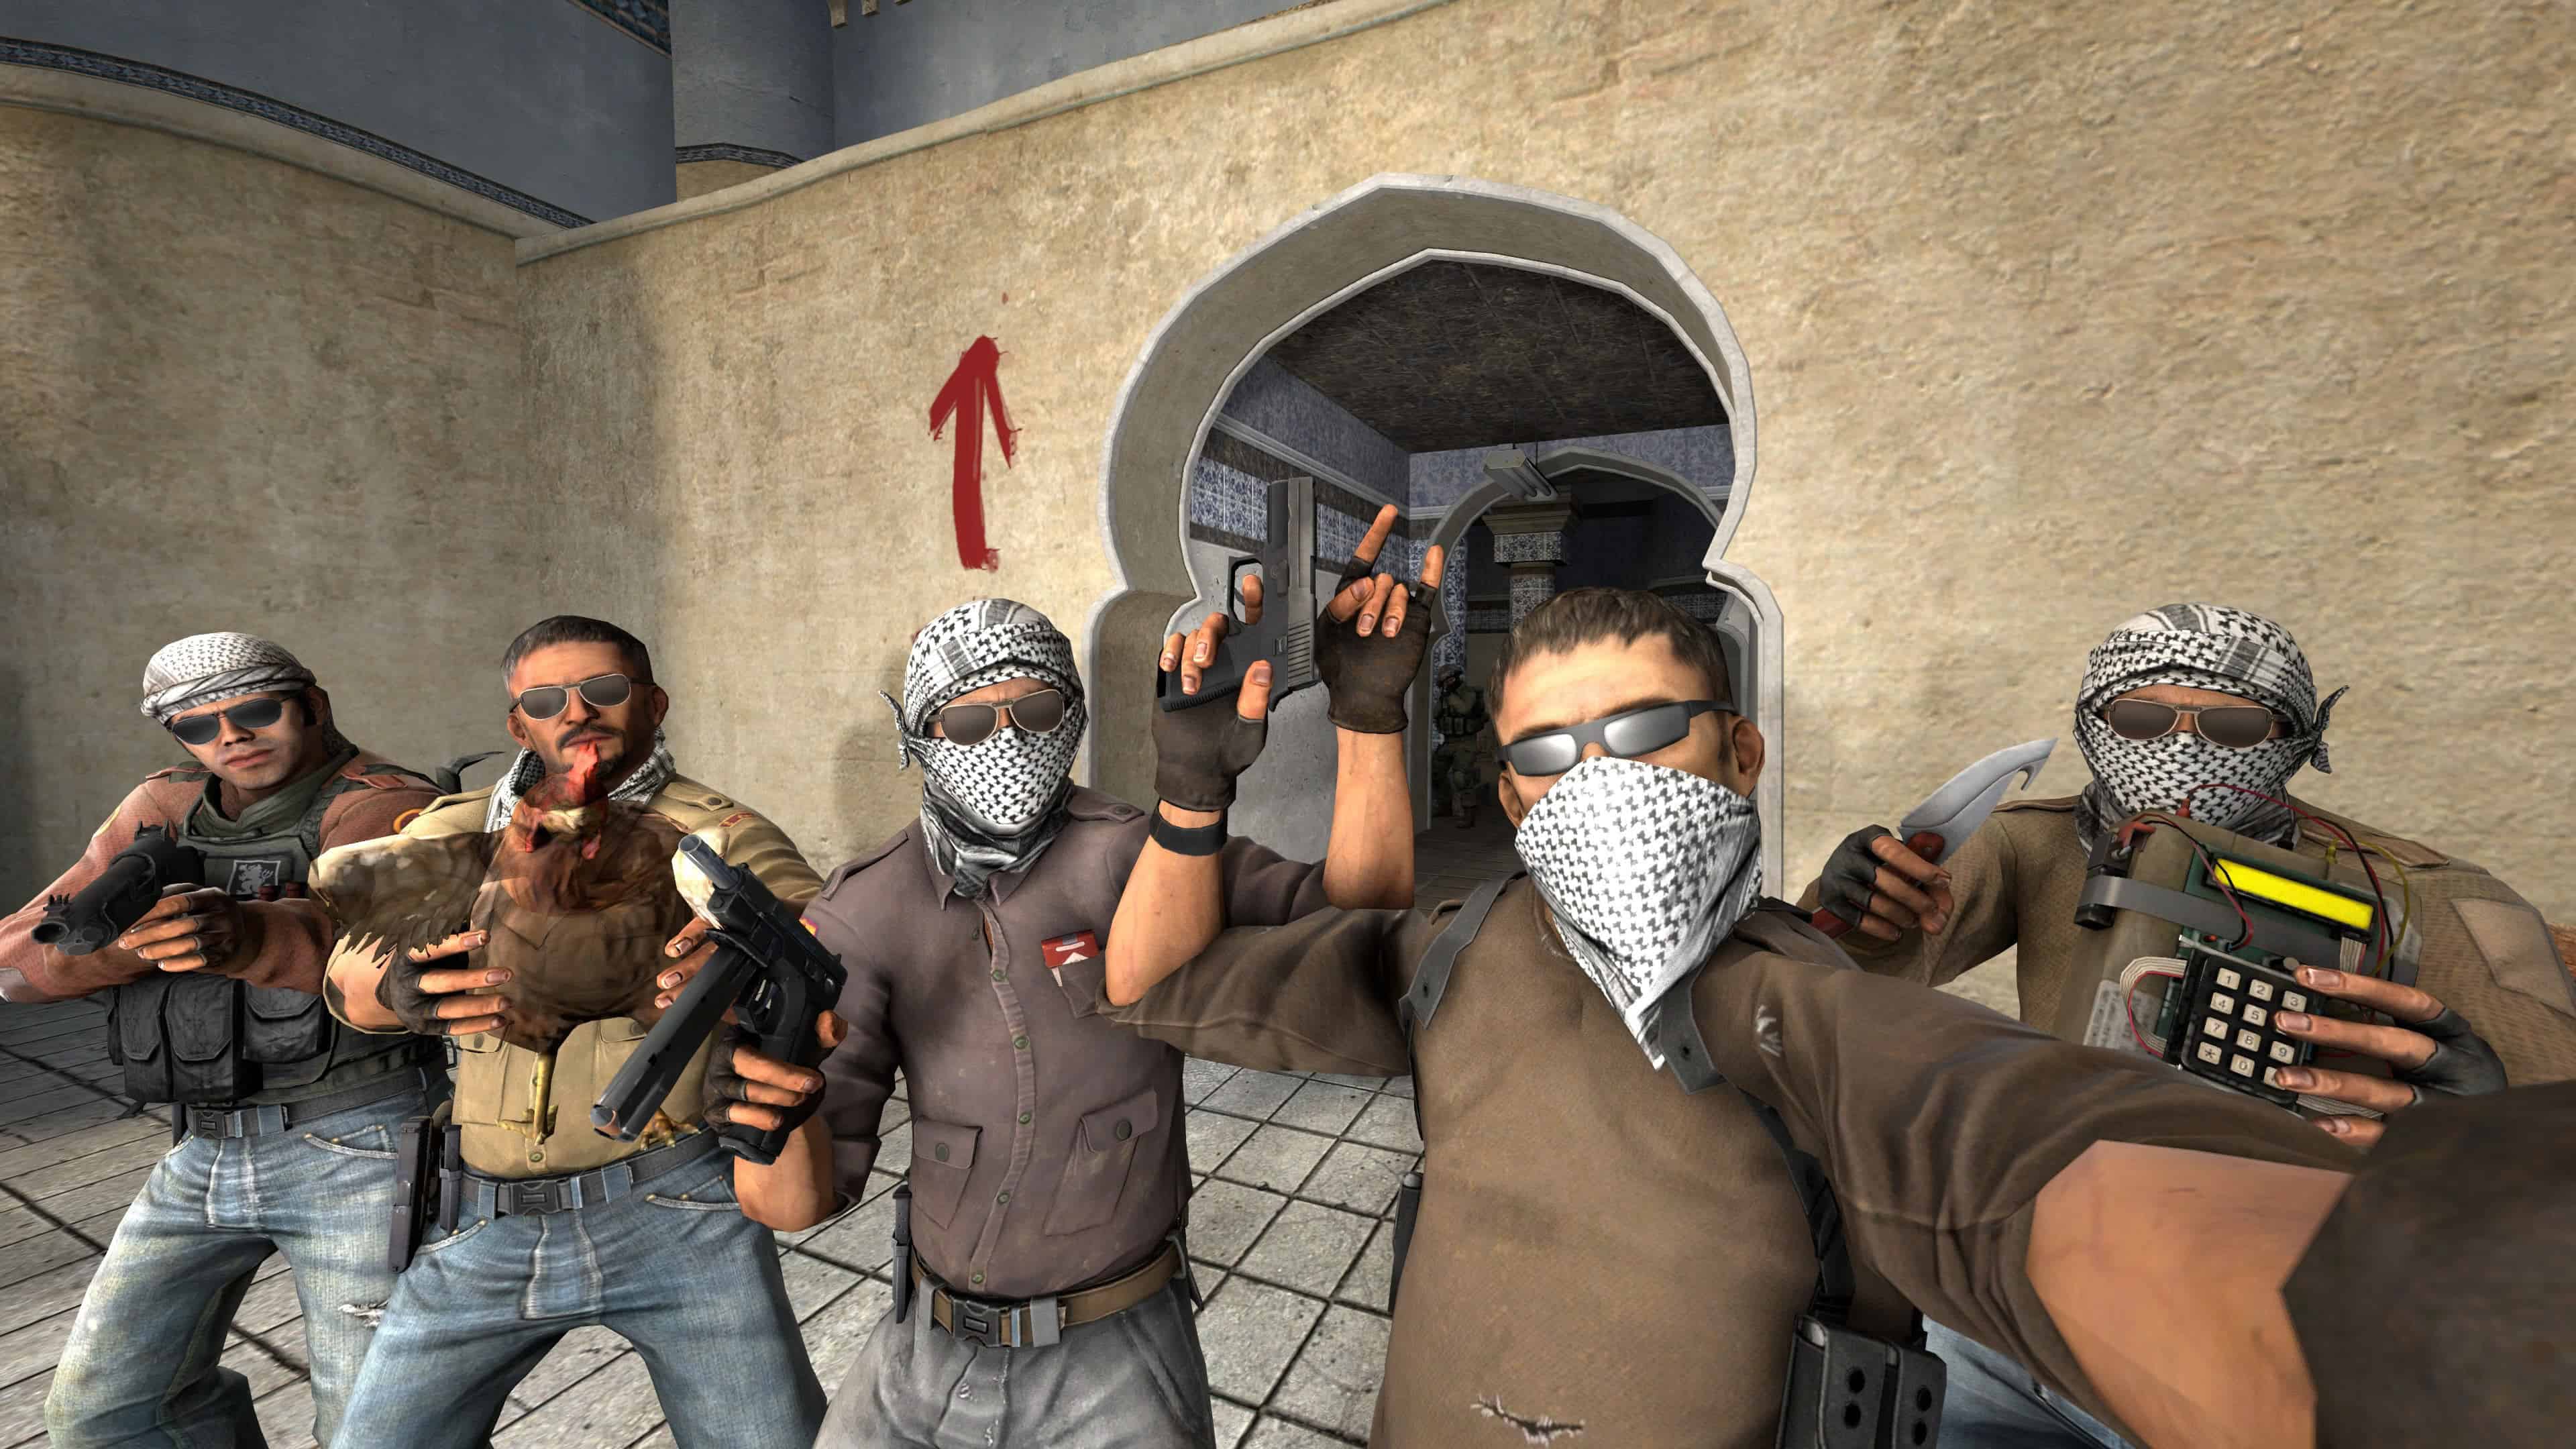 Counter Strike: Global Offensive CSGO Wallpaper 4k HD ID:3203